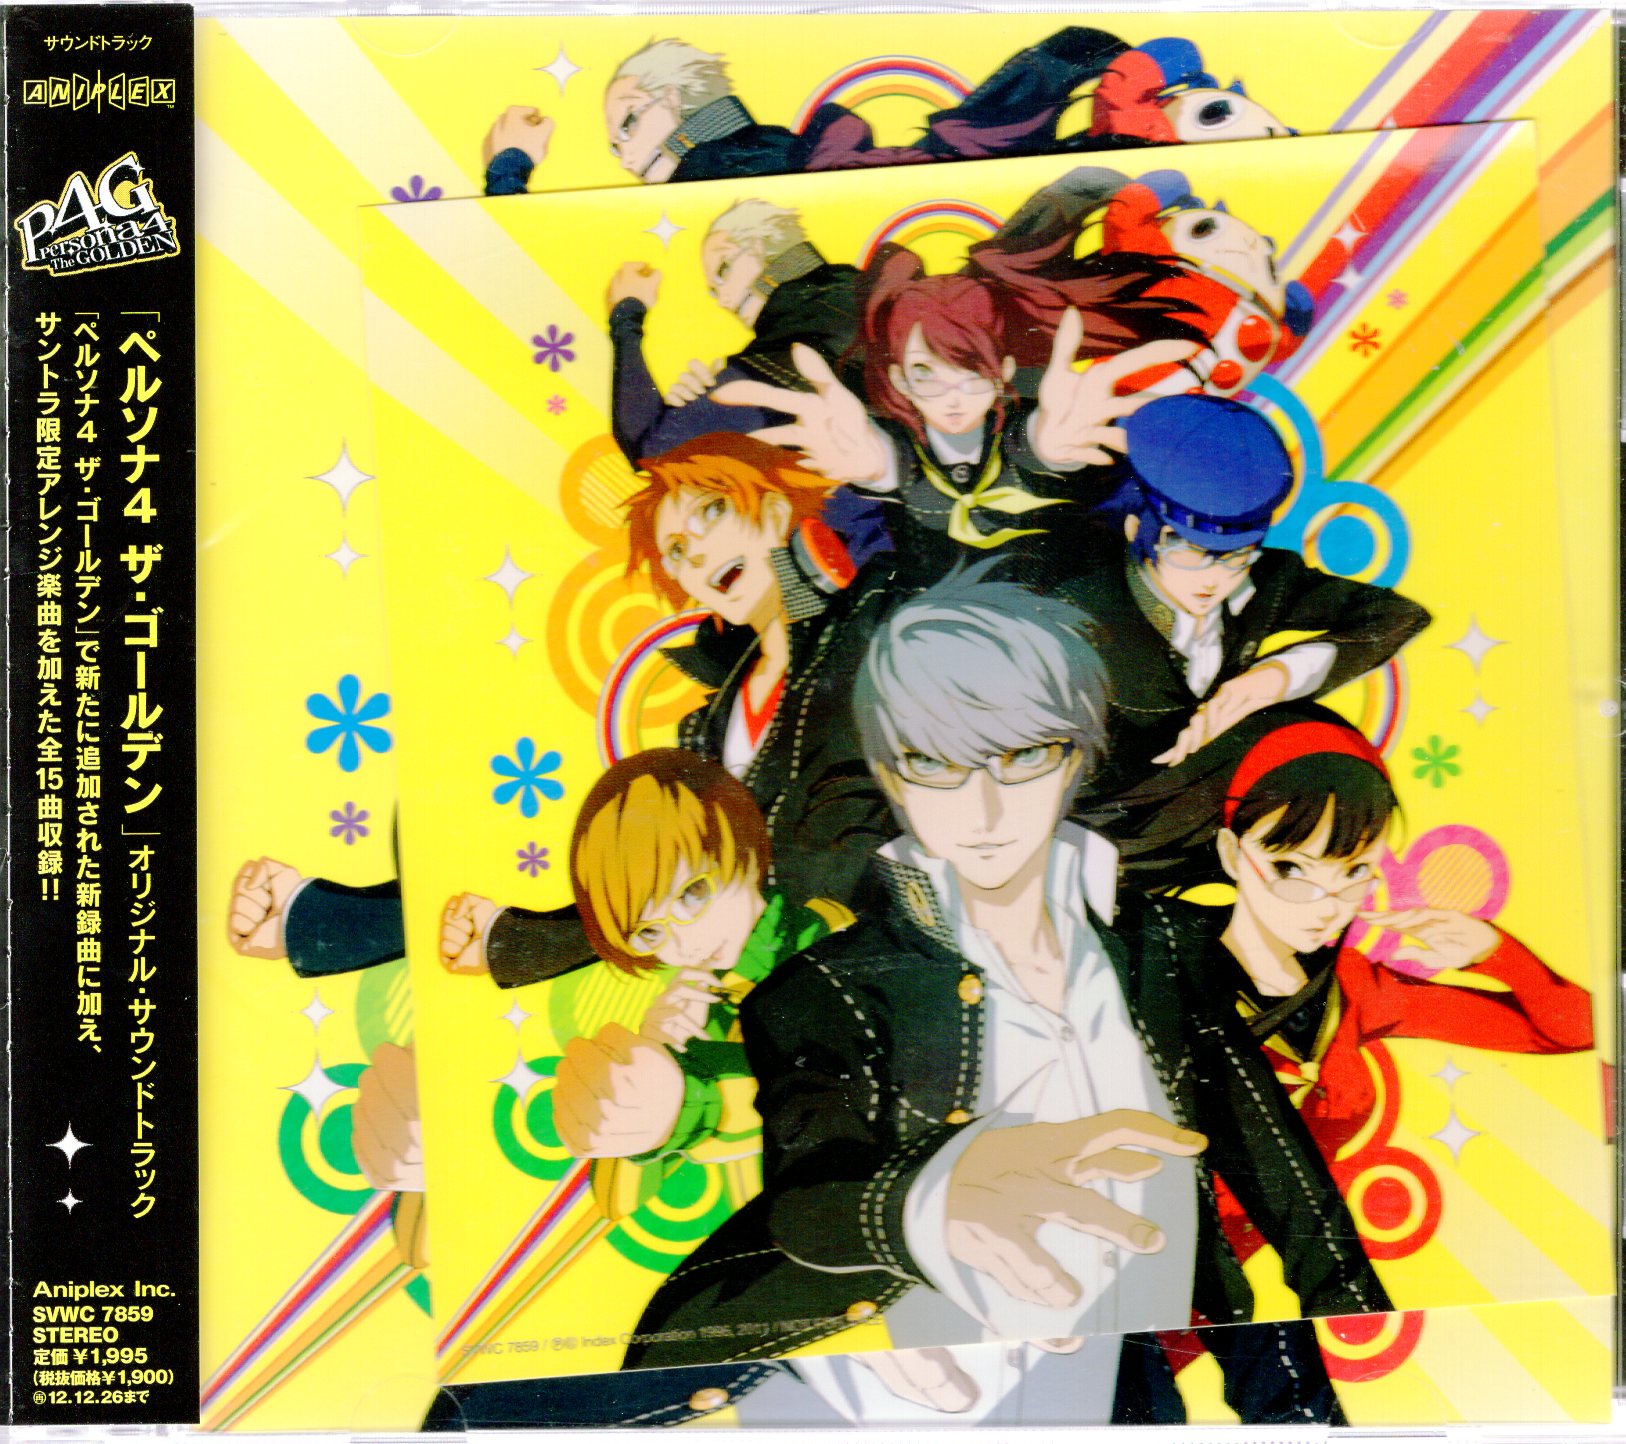 Aniplex Game Cd First Edition Version Persona 4 The Golden Original Soundtrack Mandarake Online Shop